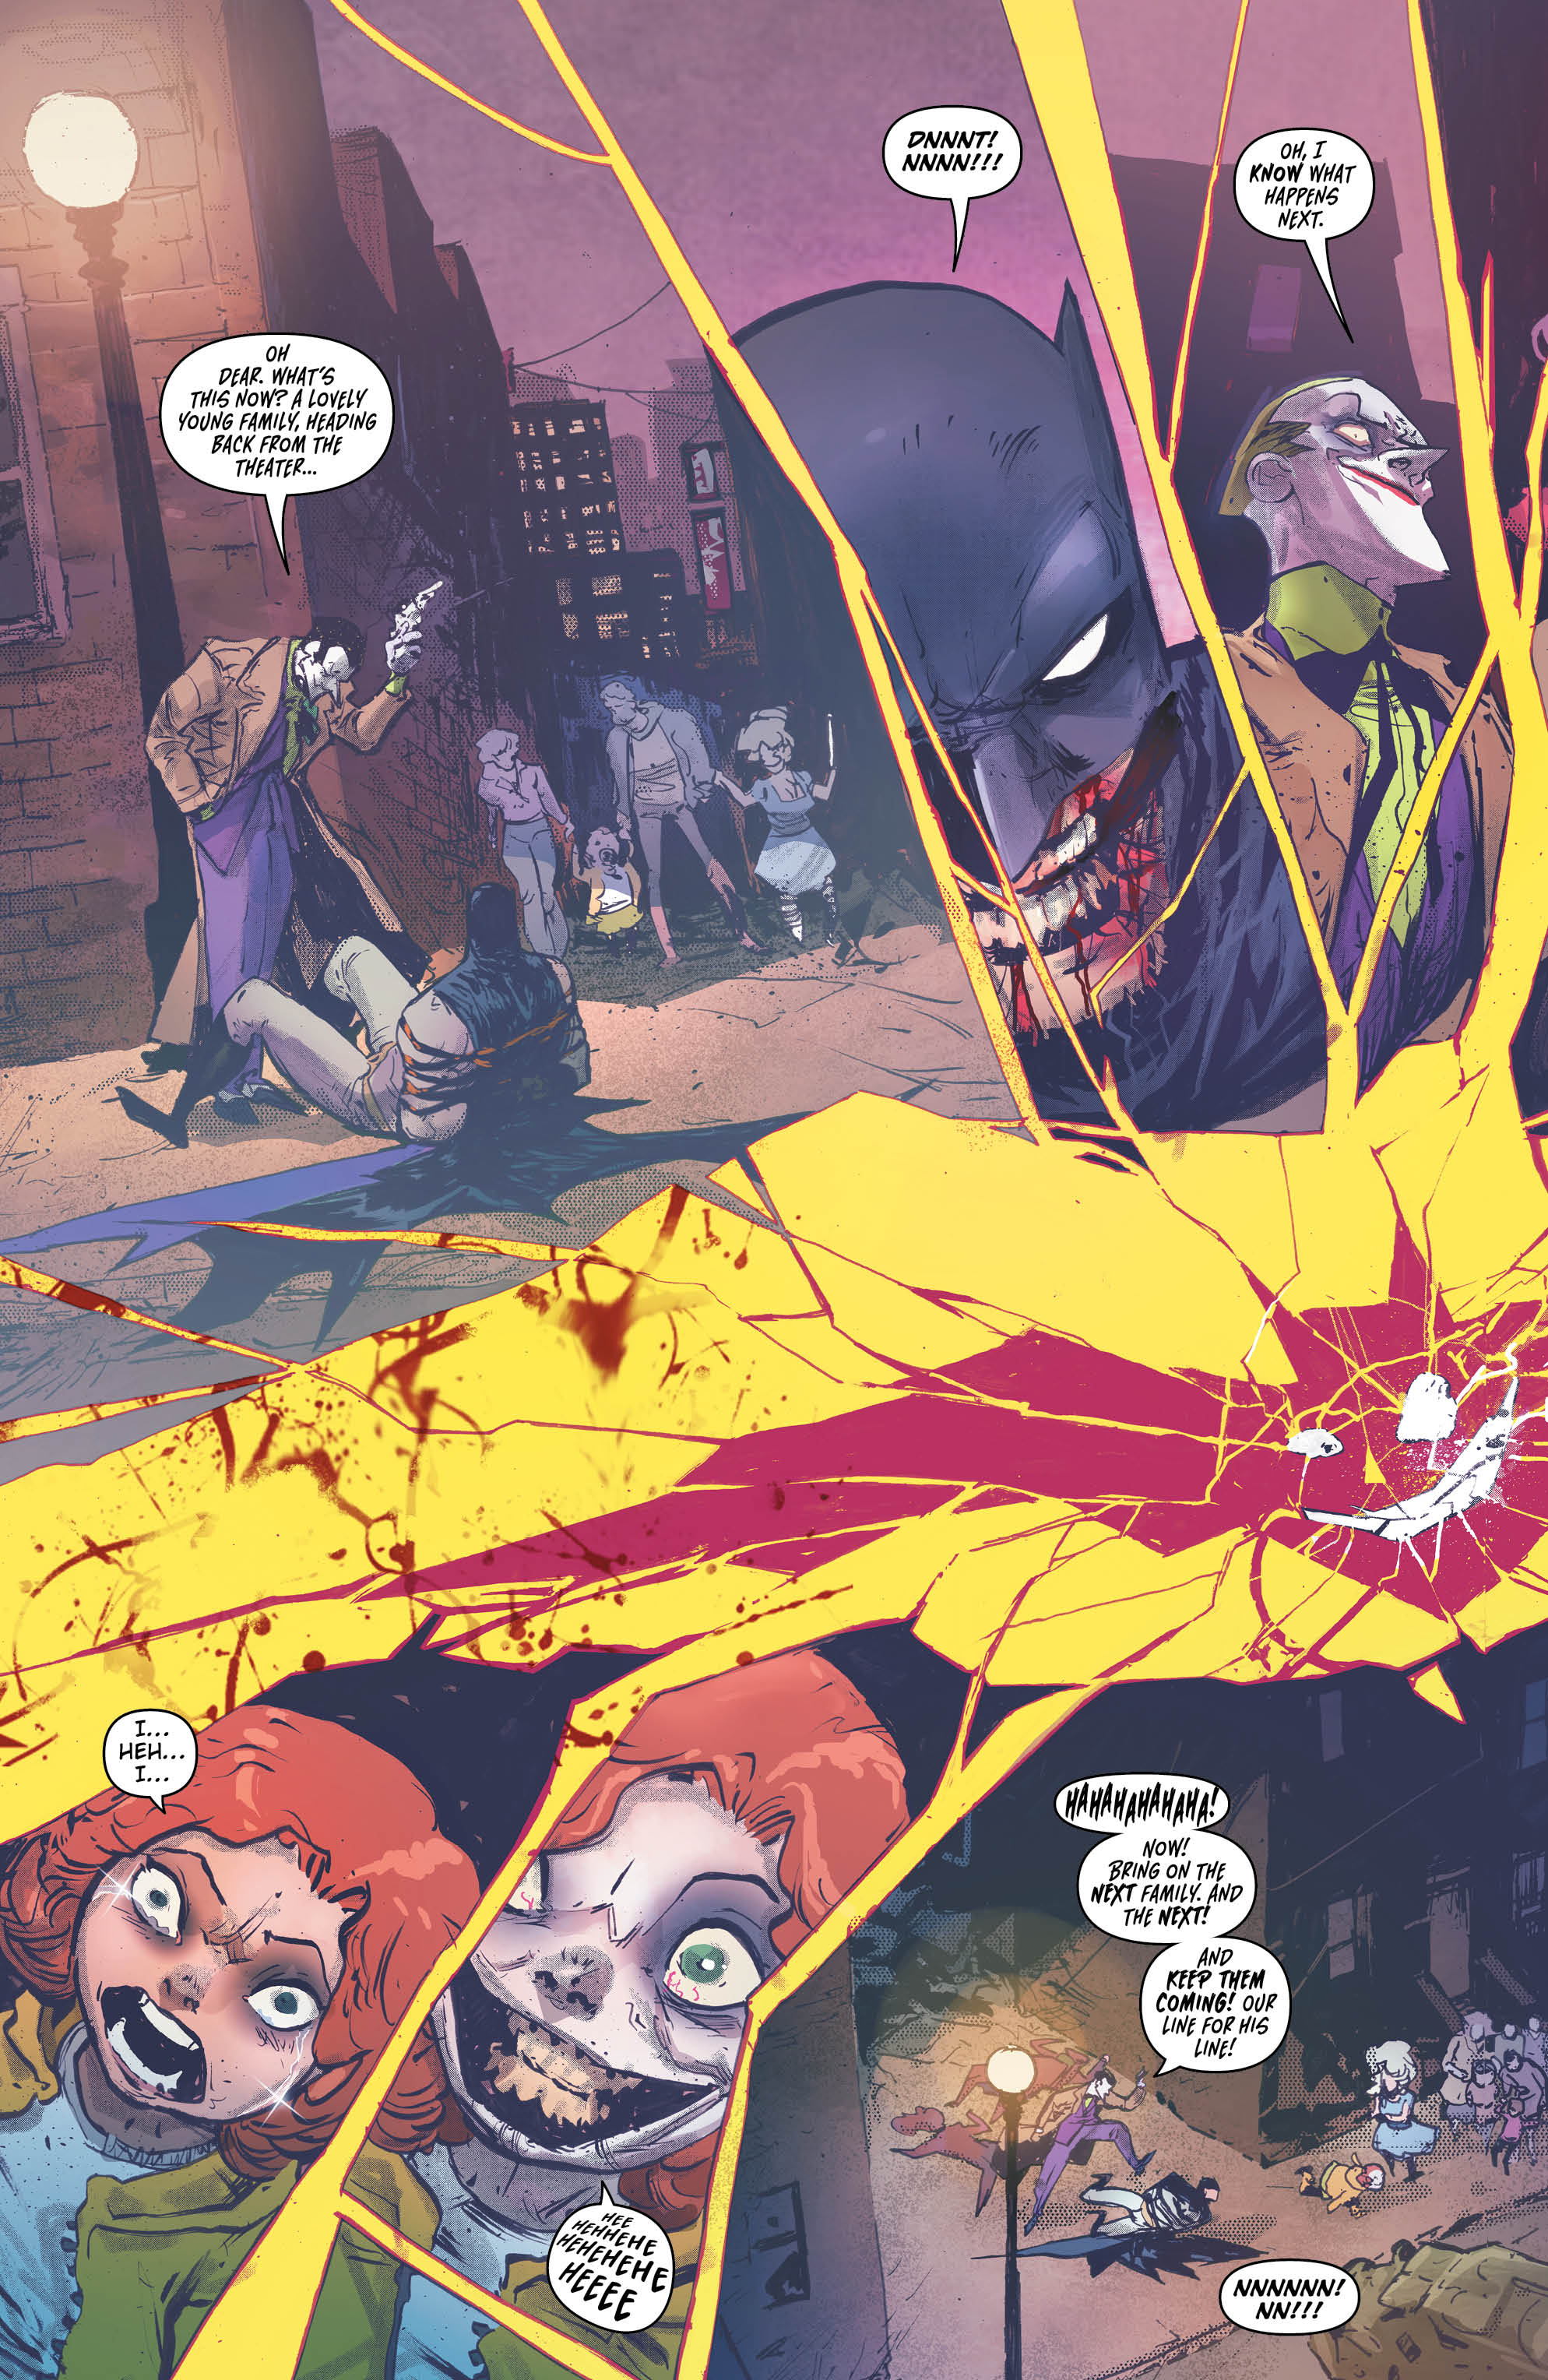 Comic Book Review: The Batman Who Laughs #1 - Bounding Into Comics